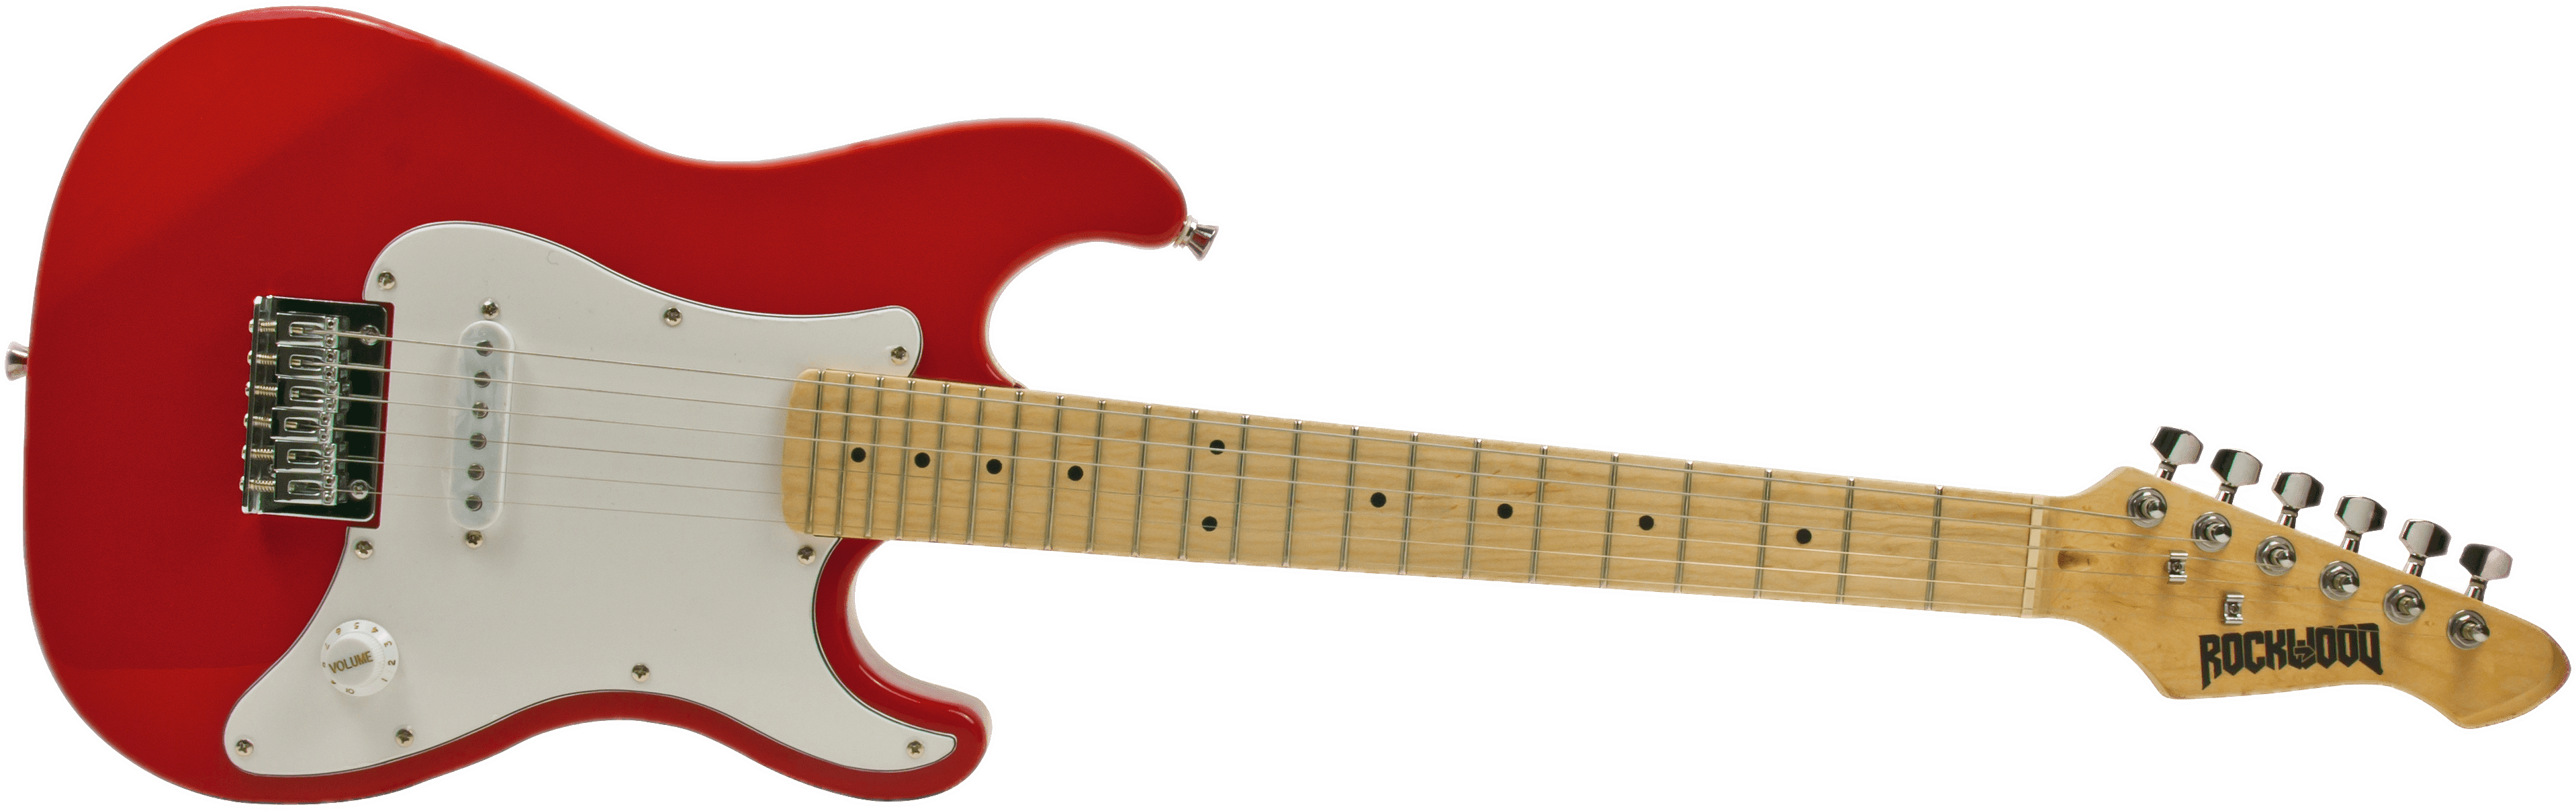 Rockwood Electric Guitar Png - Guitar Png Hd (4180x1824), Png Download